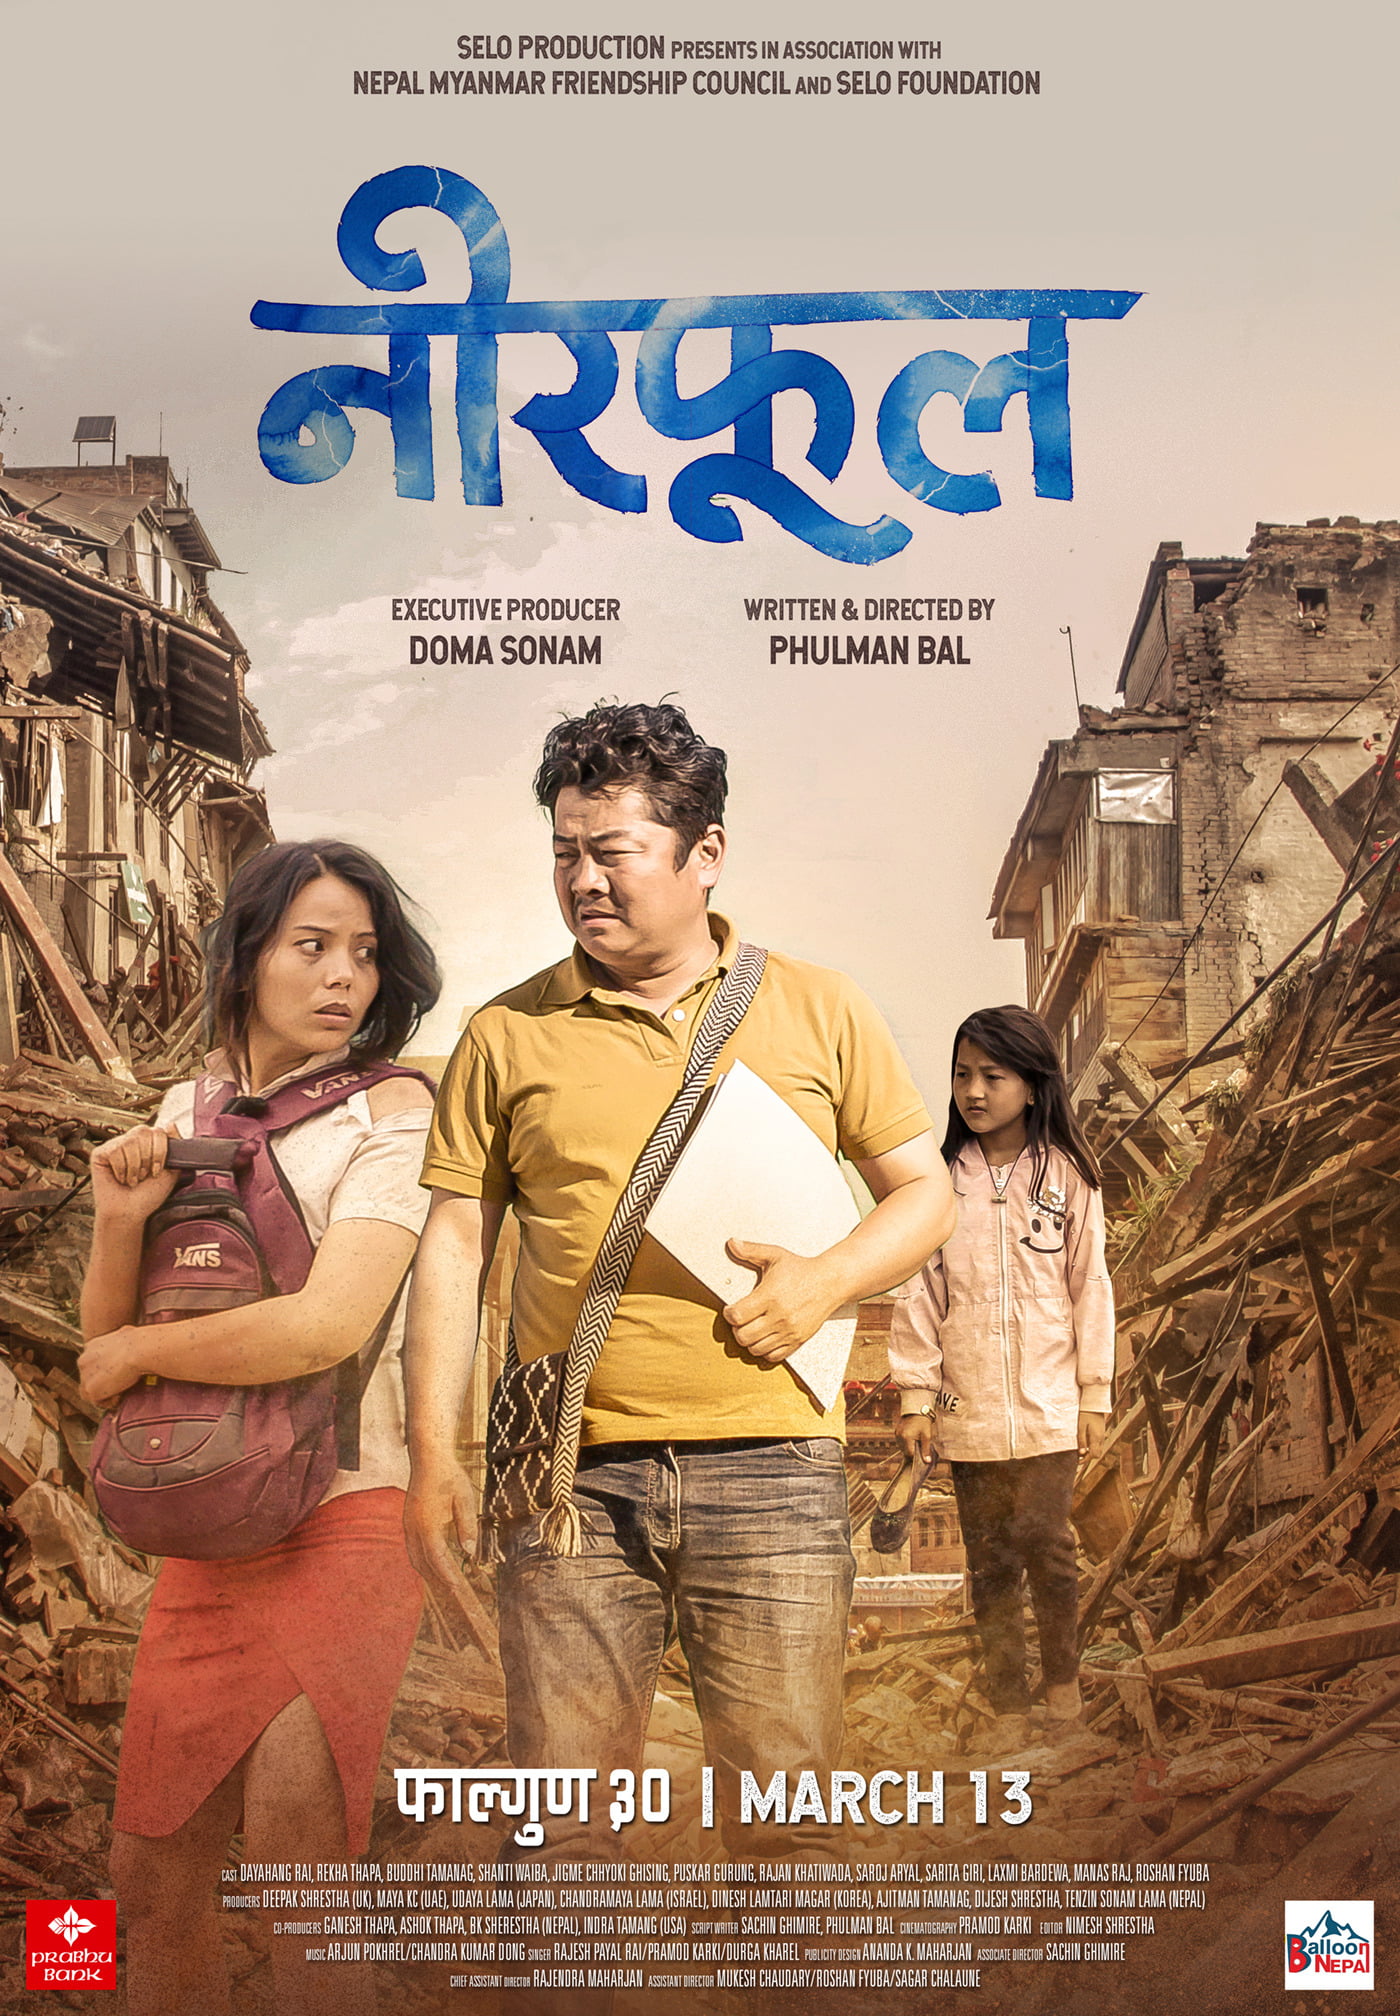 'Neerphool' trailer with Dayahang Rai features an earthquake story. 1